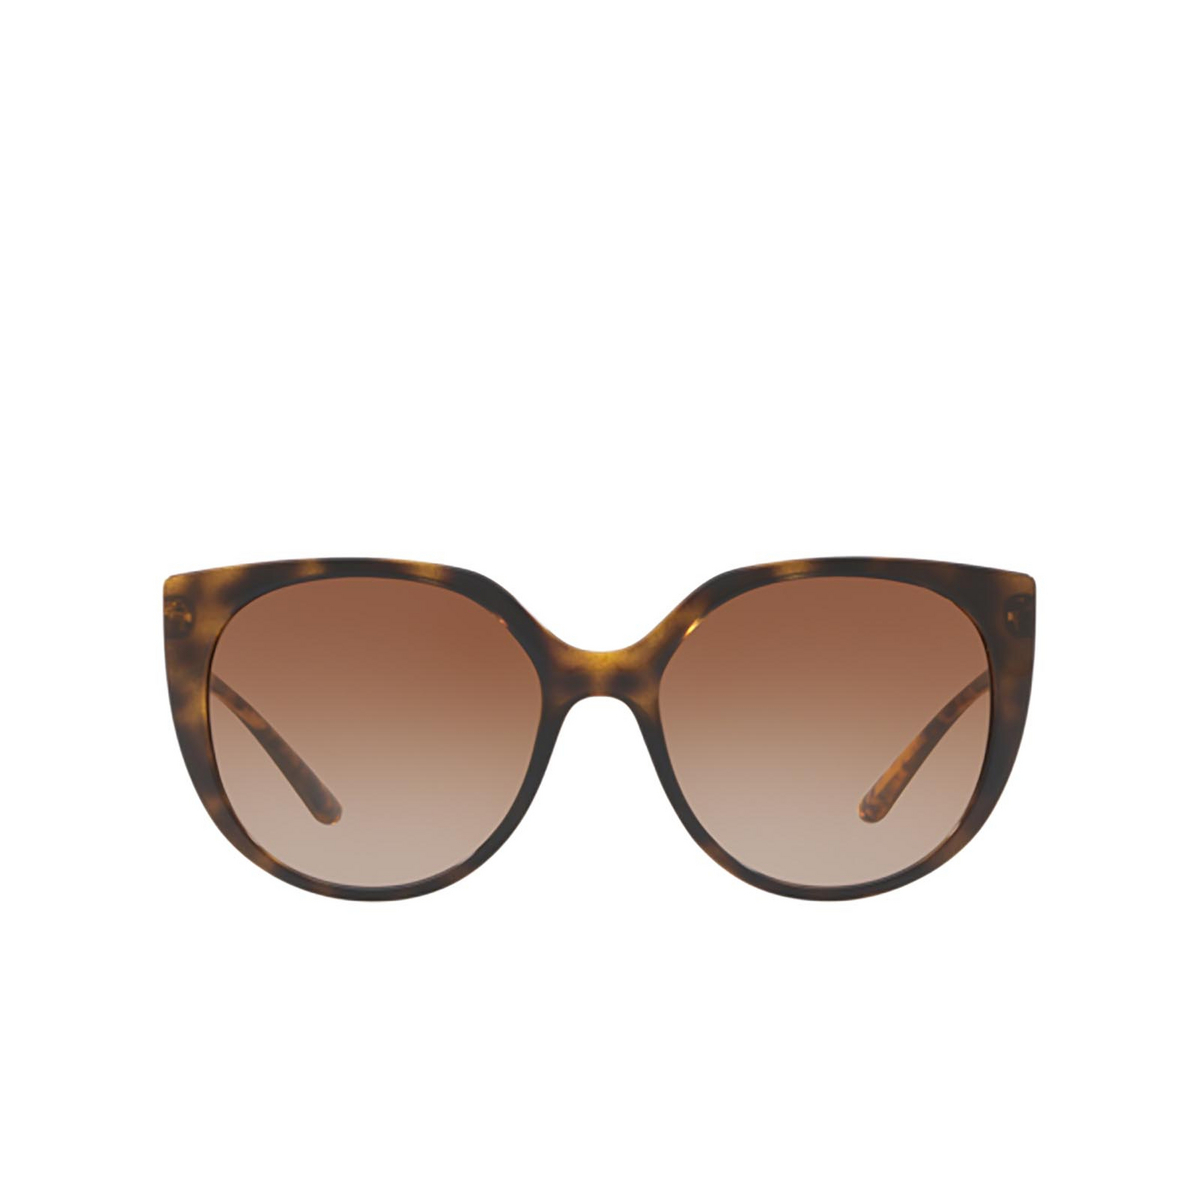 Dolce & Gabbana DG6119 Sunglasses 502/13 HAVANA - front view